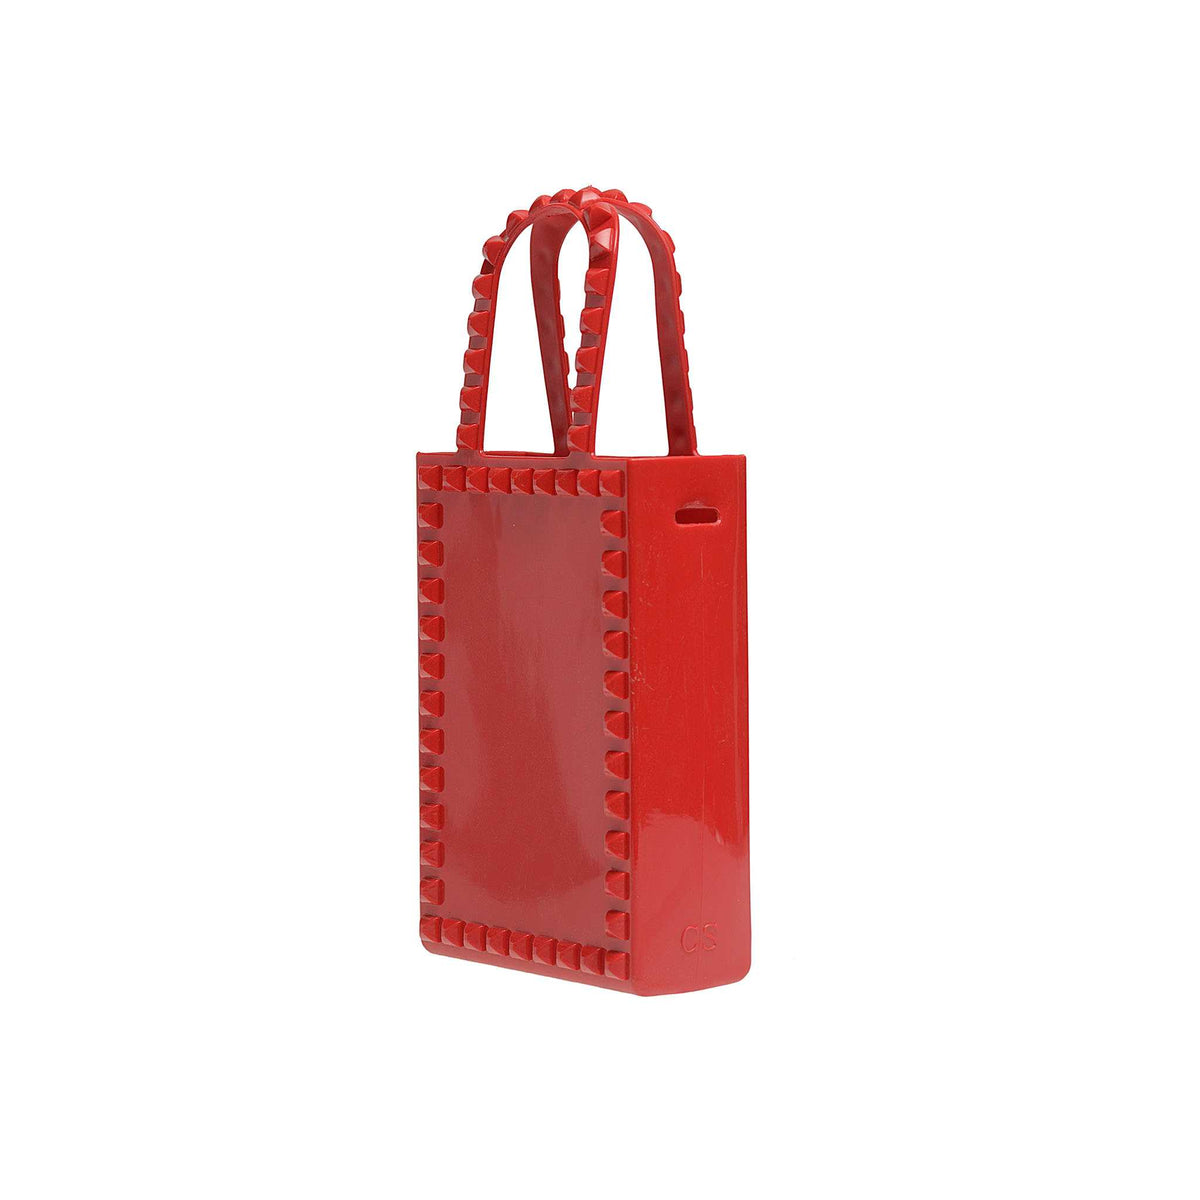 Red messenger bag for beach lovers from Carmen Sol.